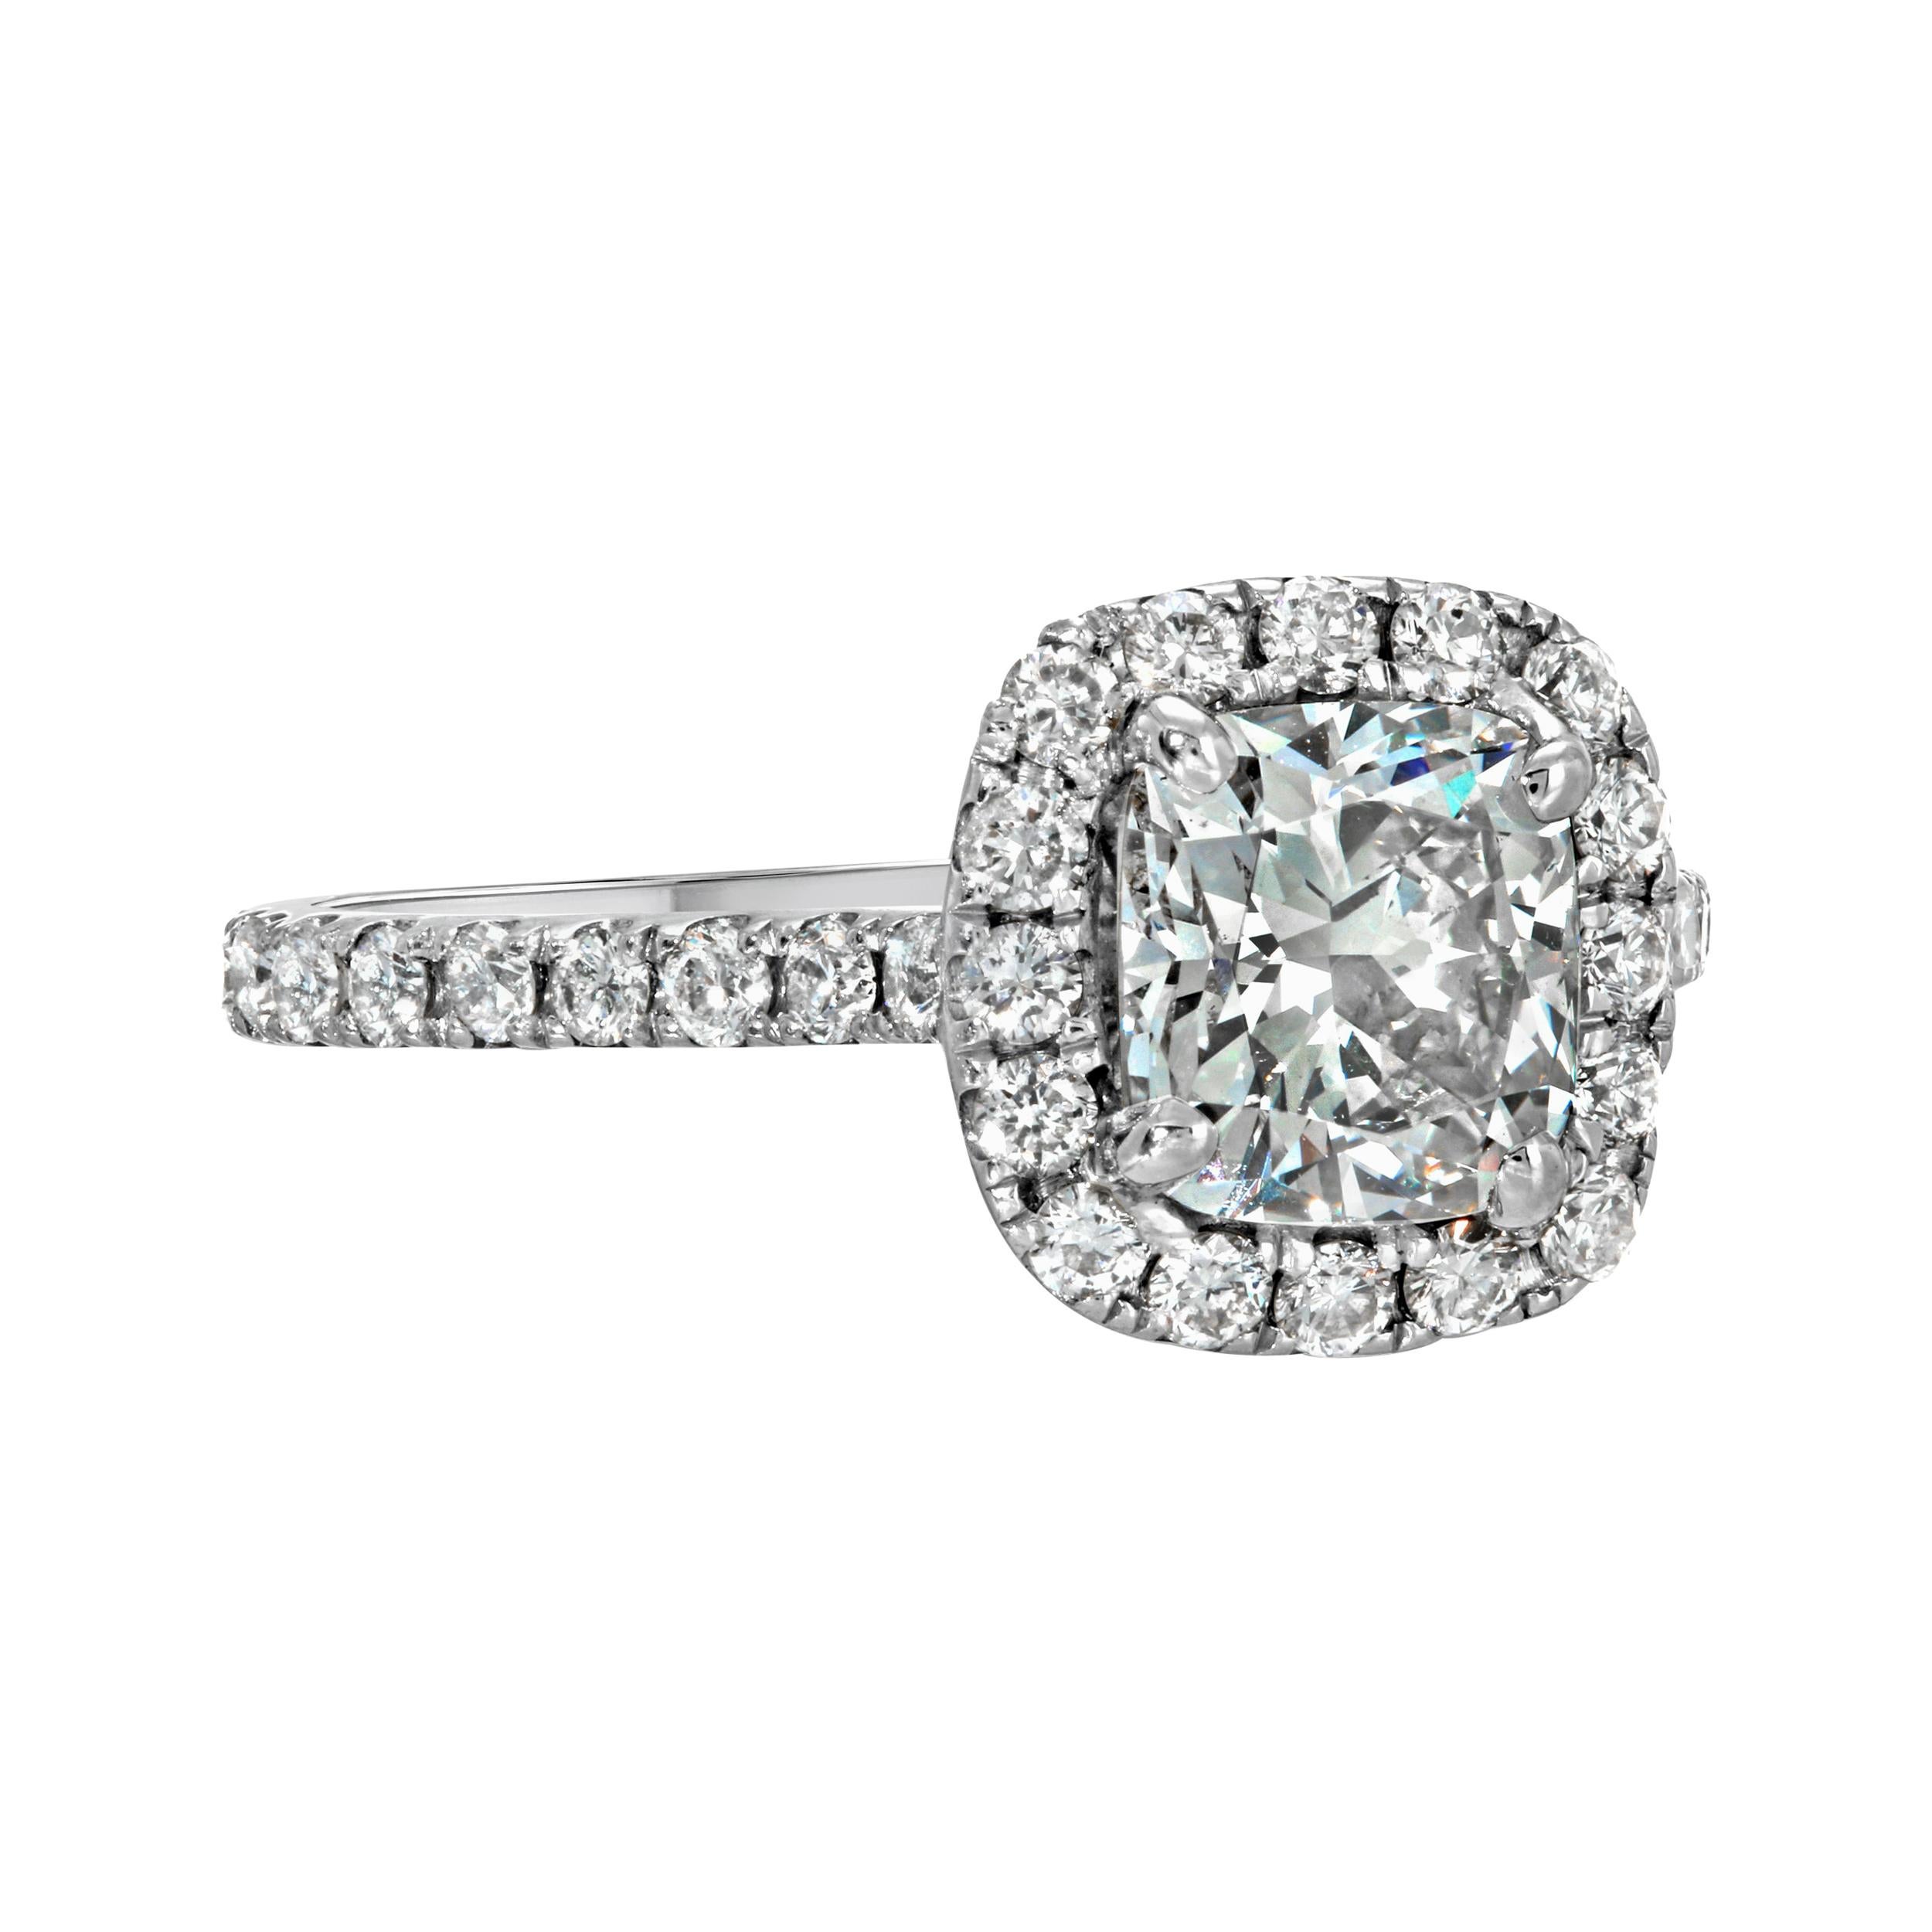 Diamond Cushion Cut 1.17 Carat Engagement Ring Platinum with GIA Certificate